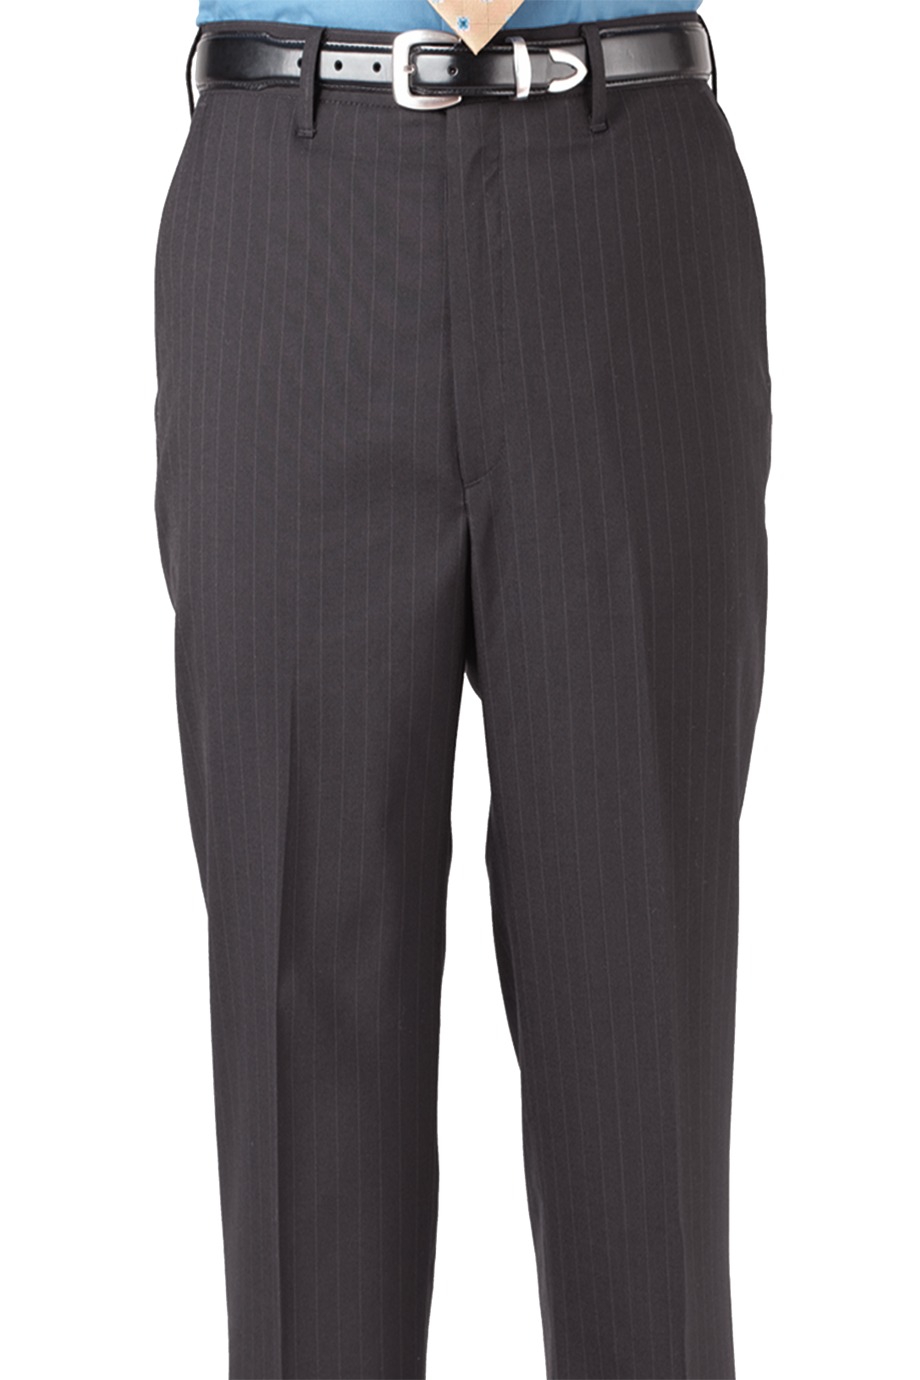 Edwards Garment 2560 - Men's Pinstripe Flat Front Pant